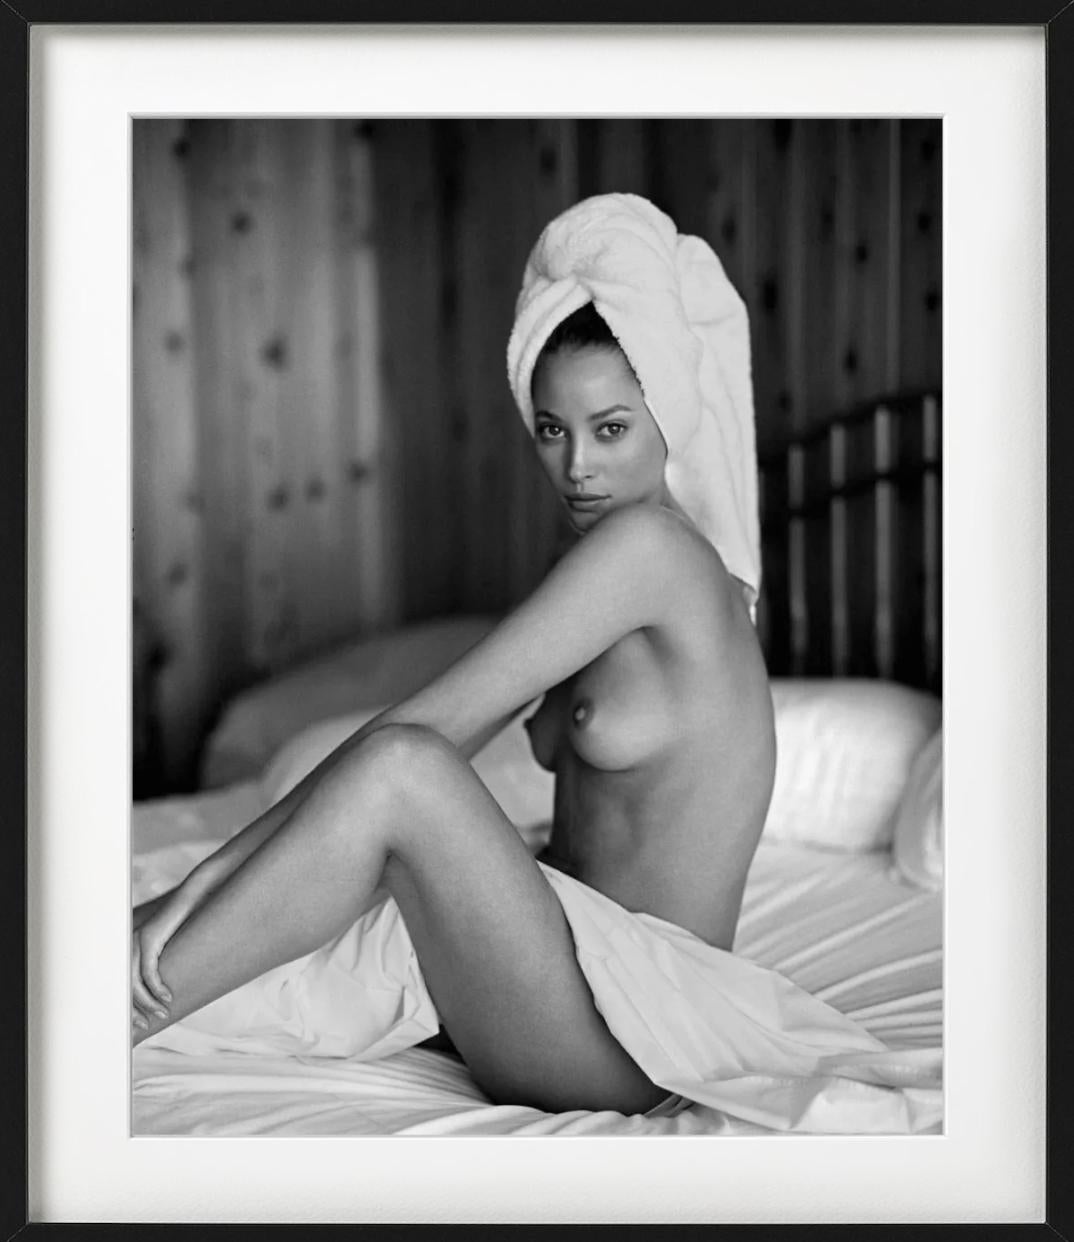 Christy Turlington, Montauk, NY – nackt mit Handtuch, Kunstfotografie, 1992 im Angebot 3